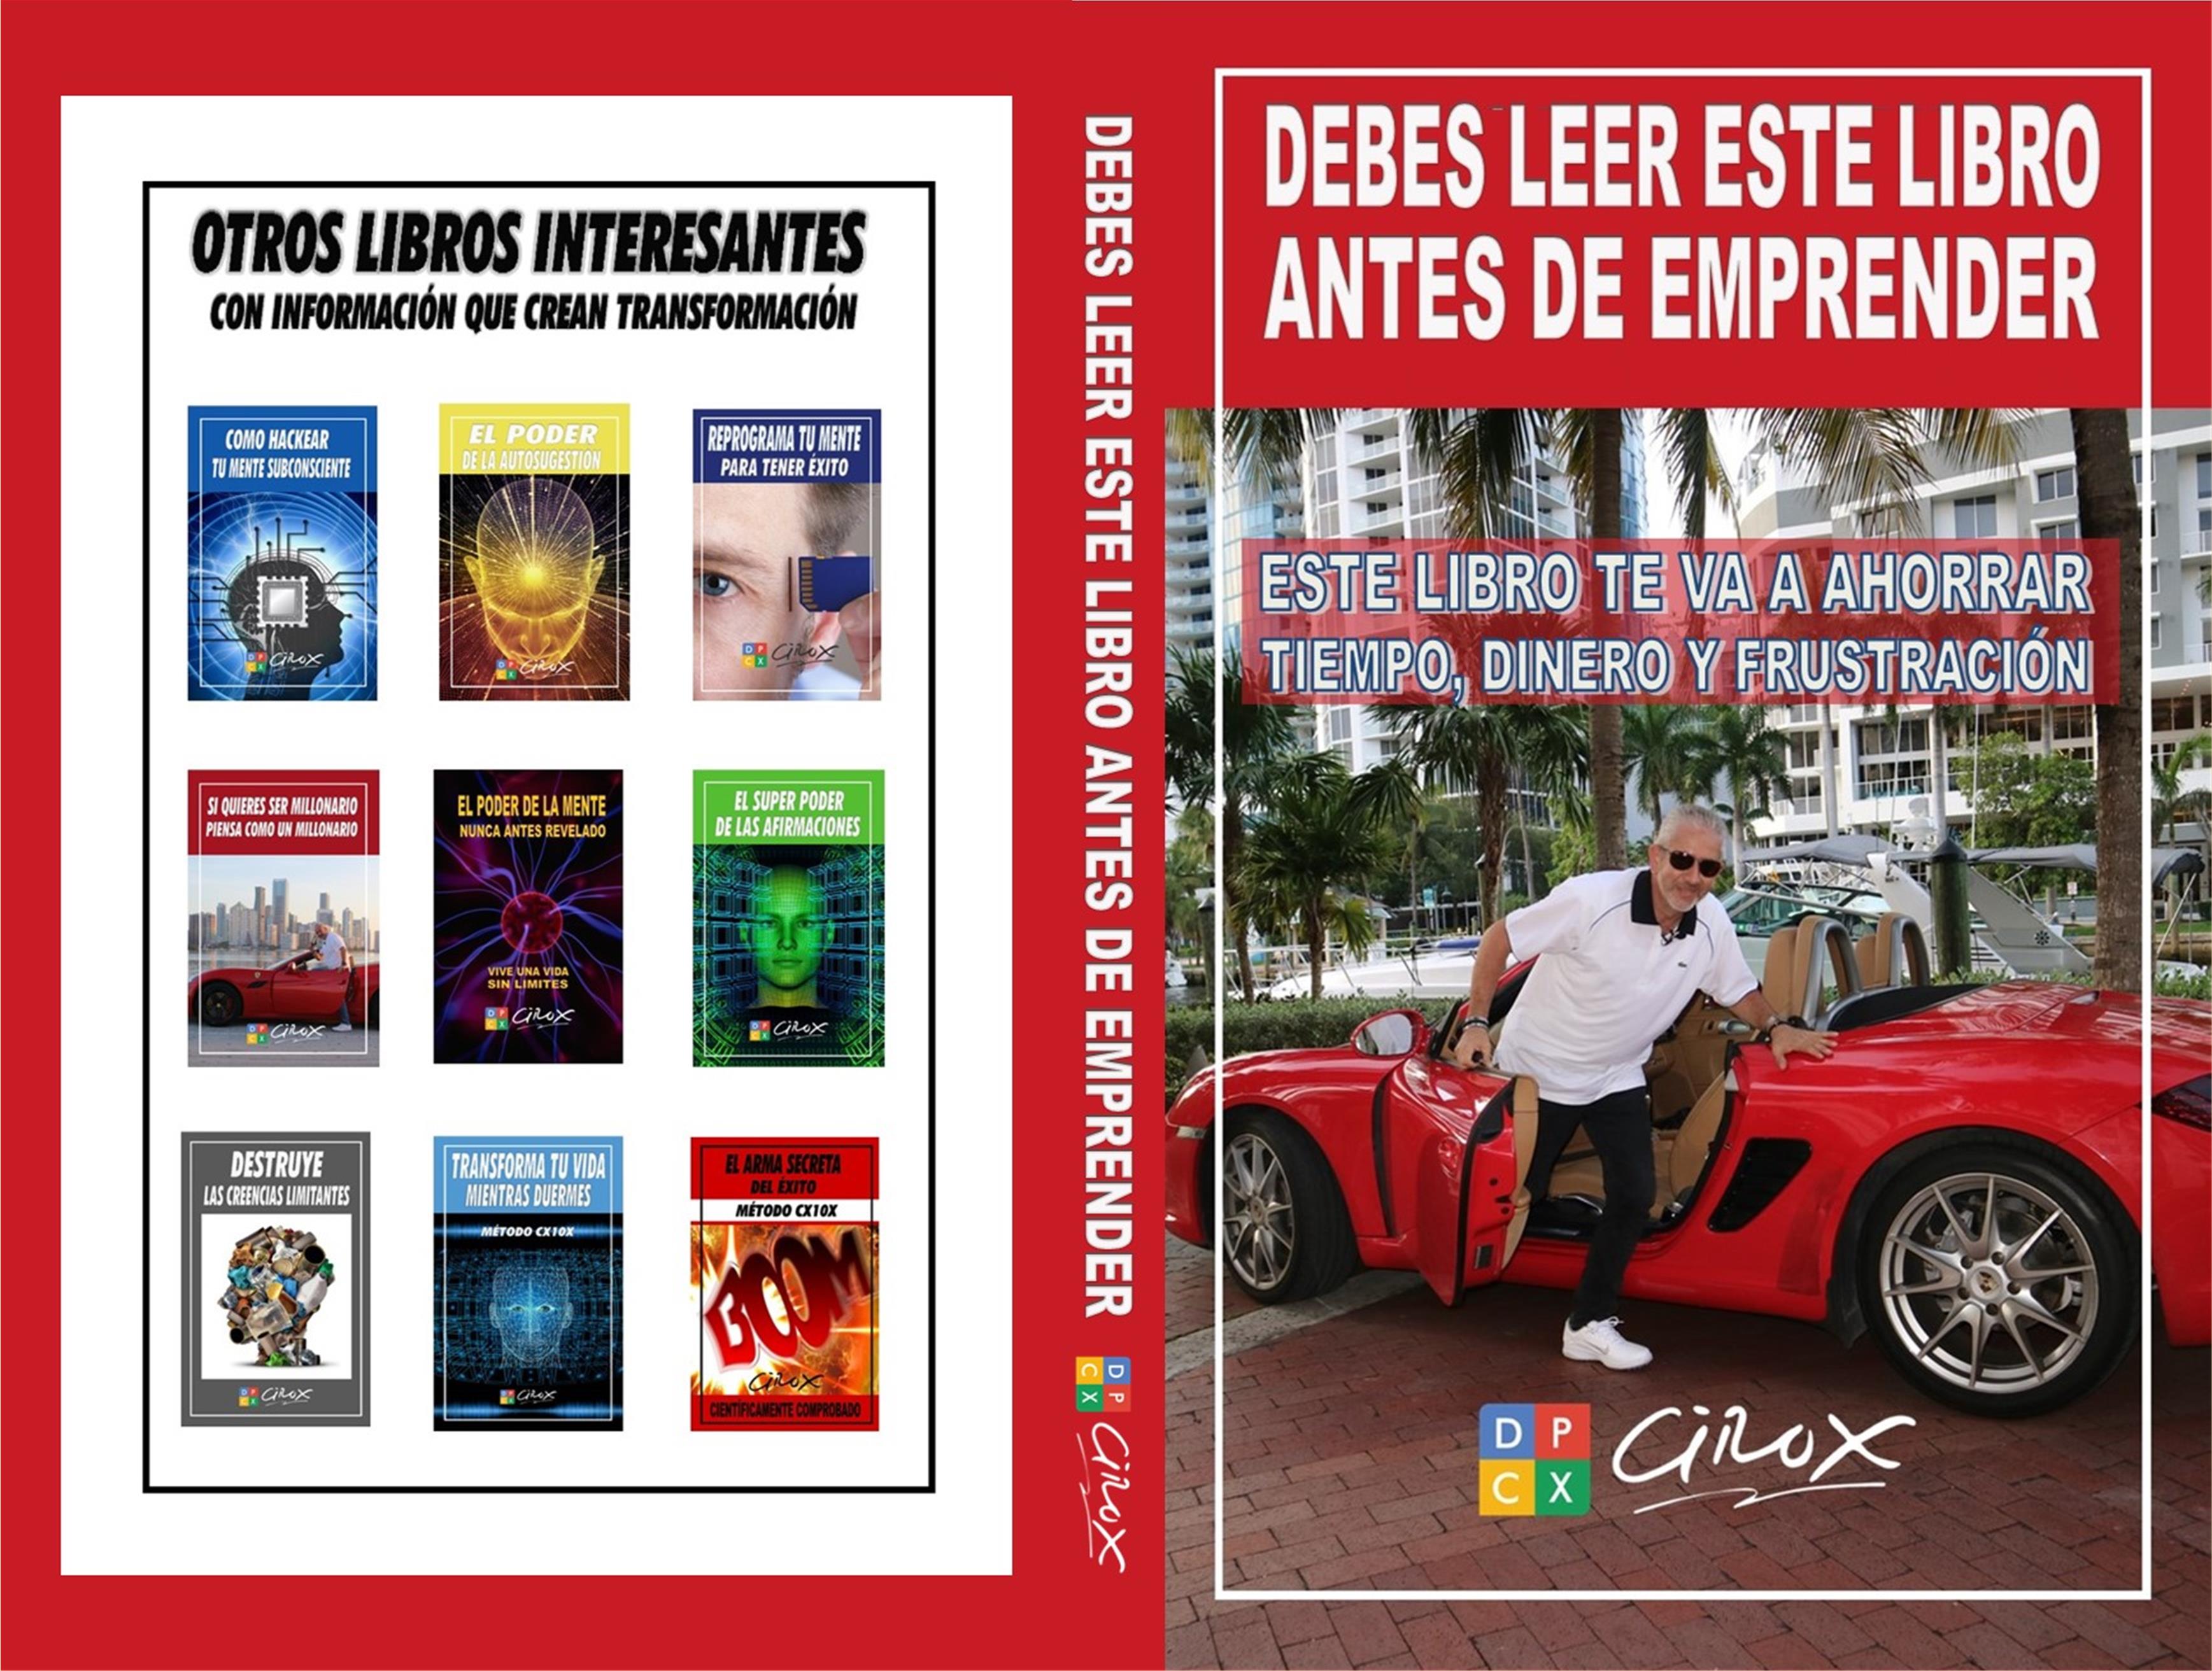 DEBES LEER ESTE LIBRO ANTES DE EMPRENDER cover image